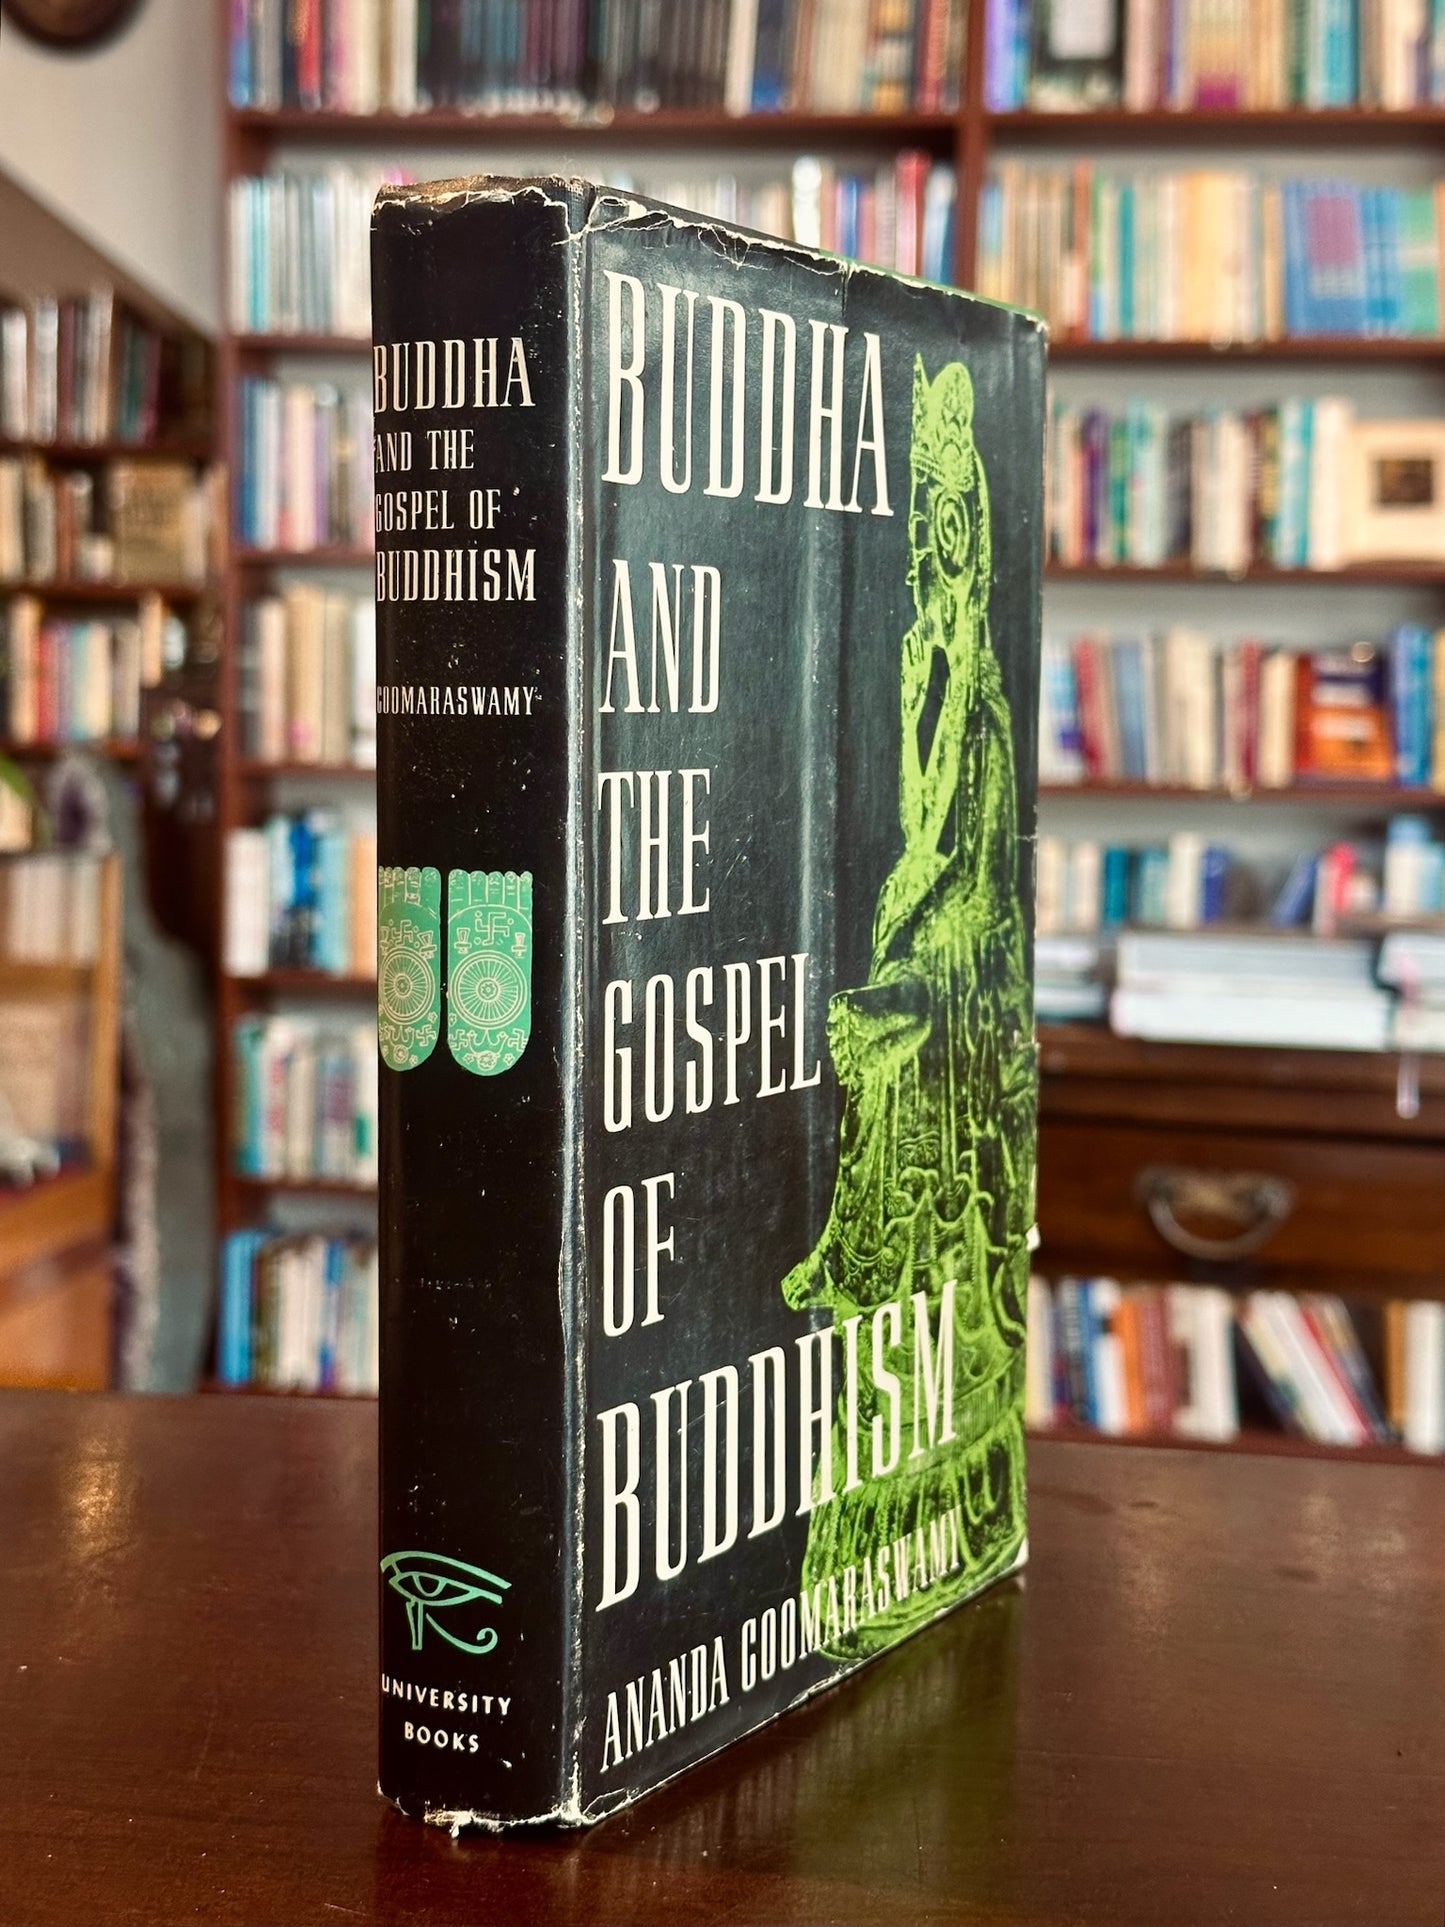 Buddha and The Gospel of Buddhism by Ananda Coomaraswamy